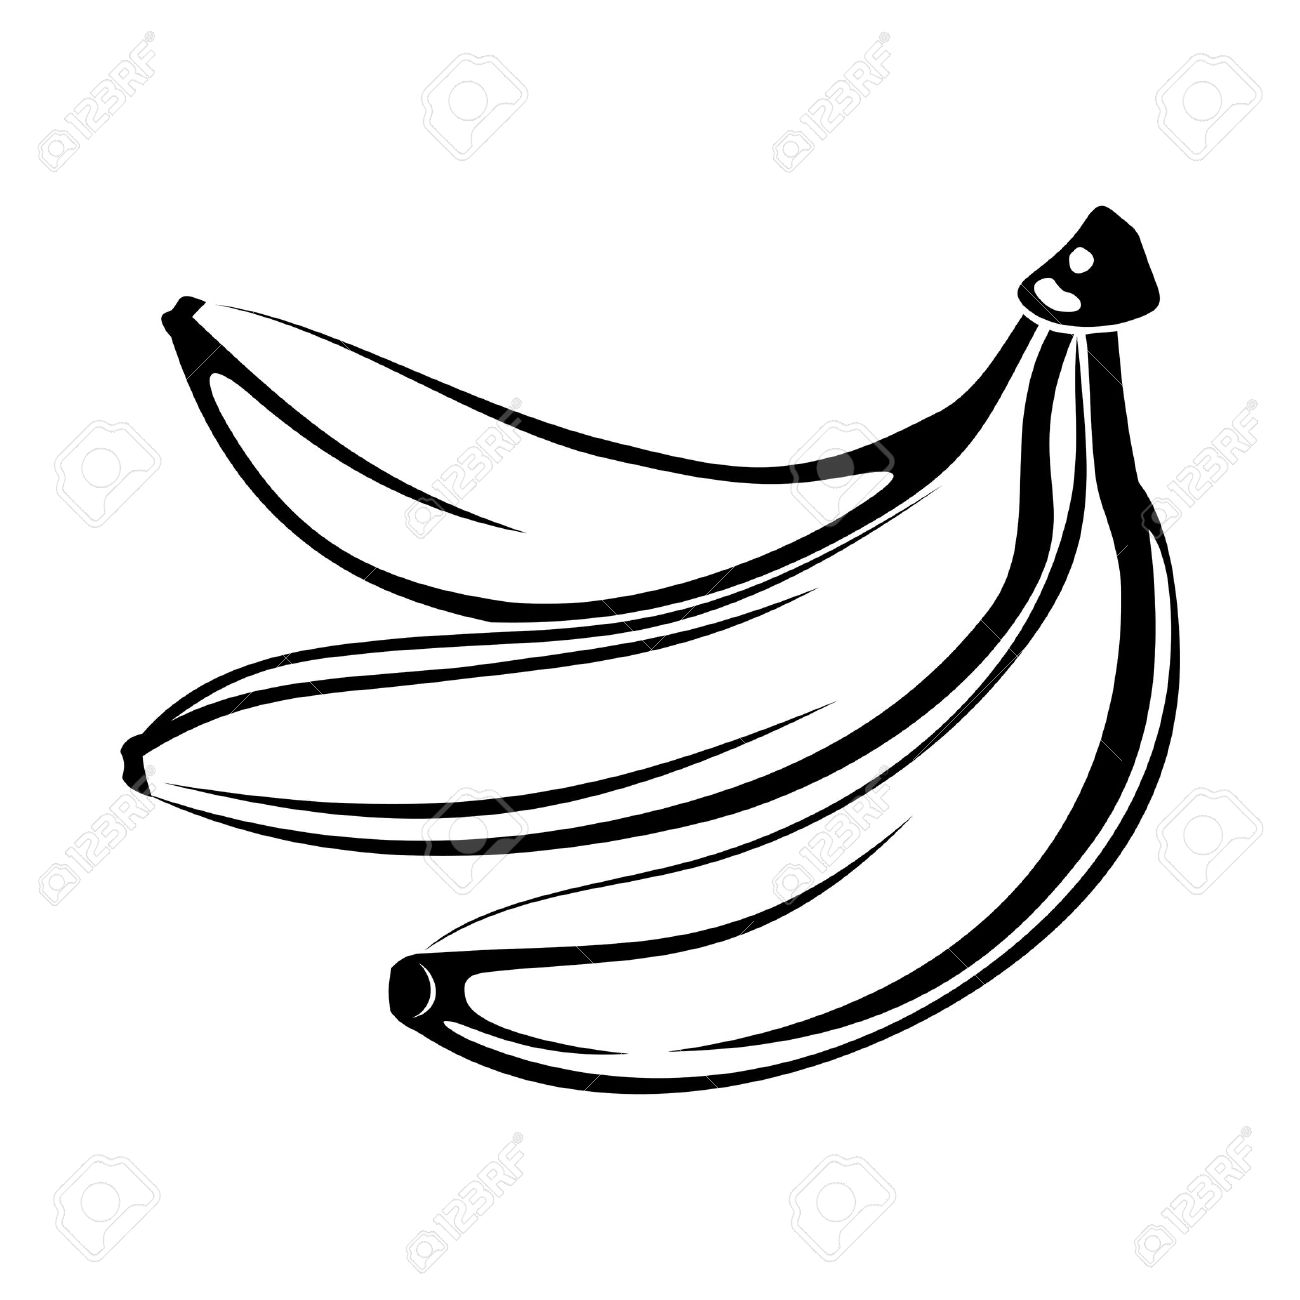 Banana clipart silhouette, Banana silhouette Transparent